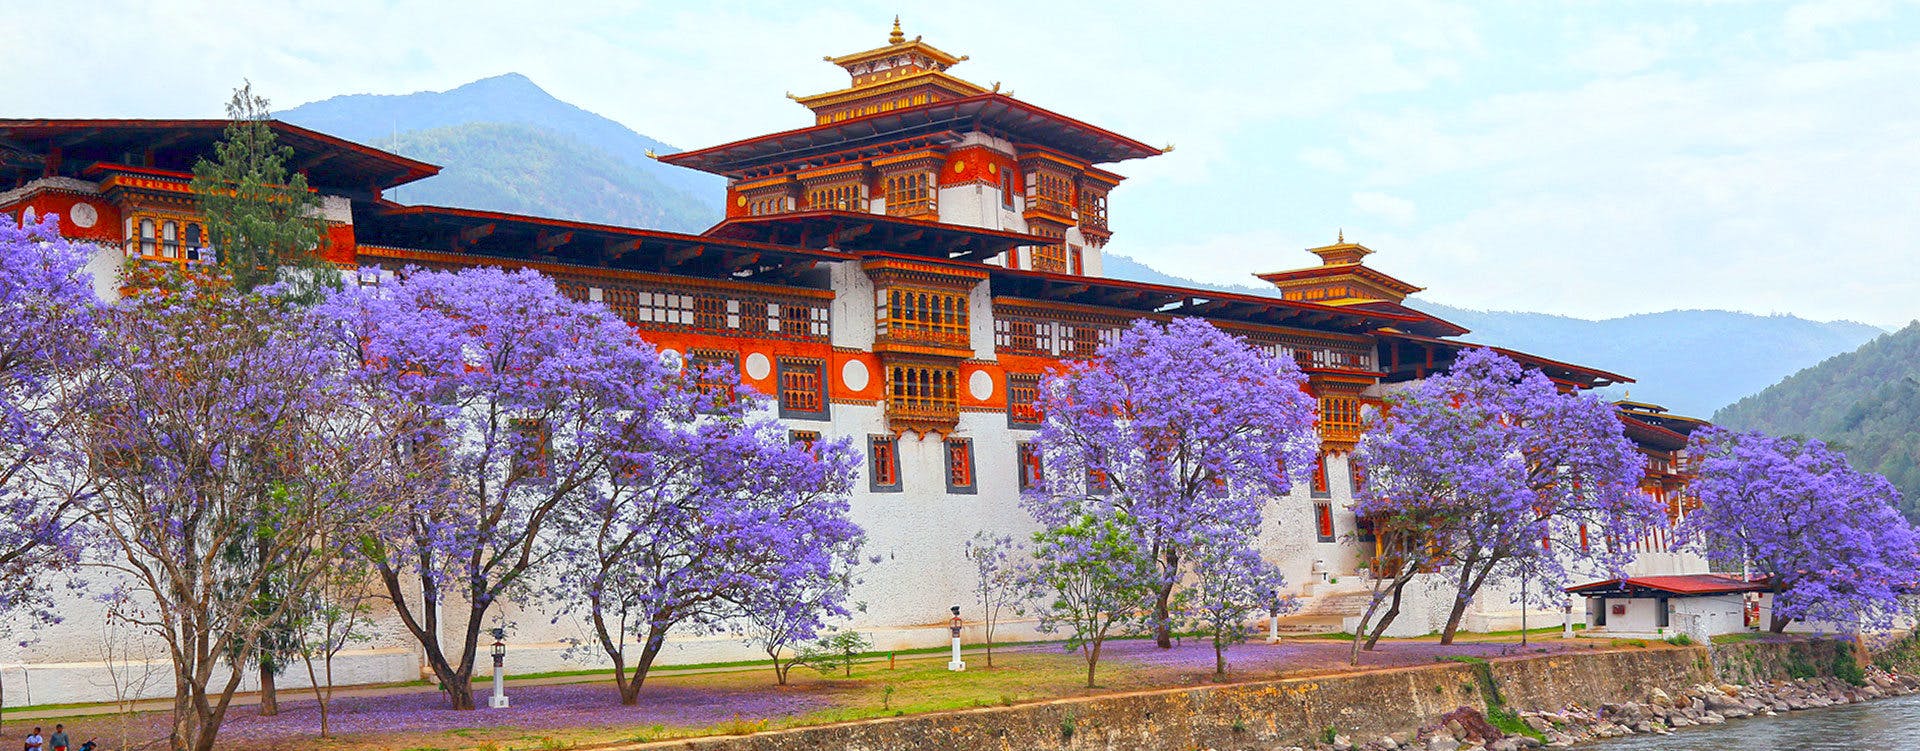 Bhutan Cultural Tour - 6 Days